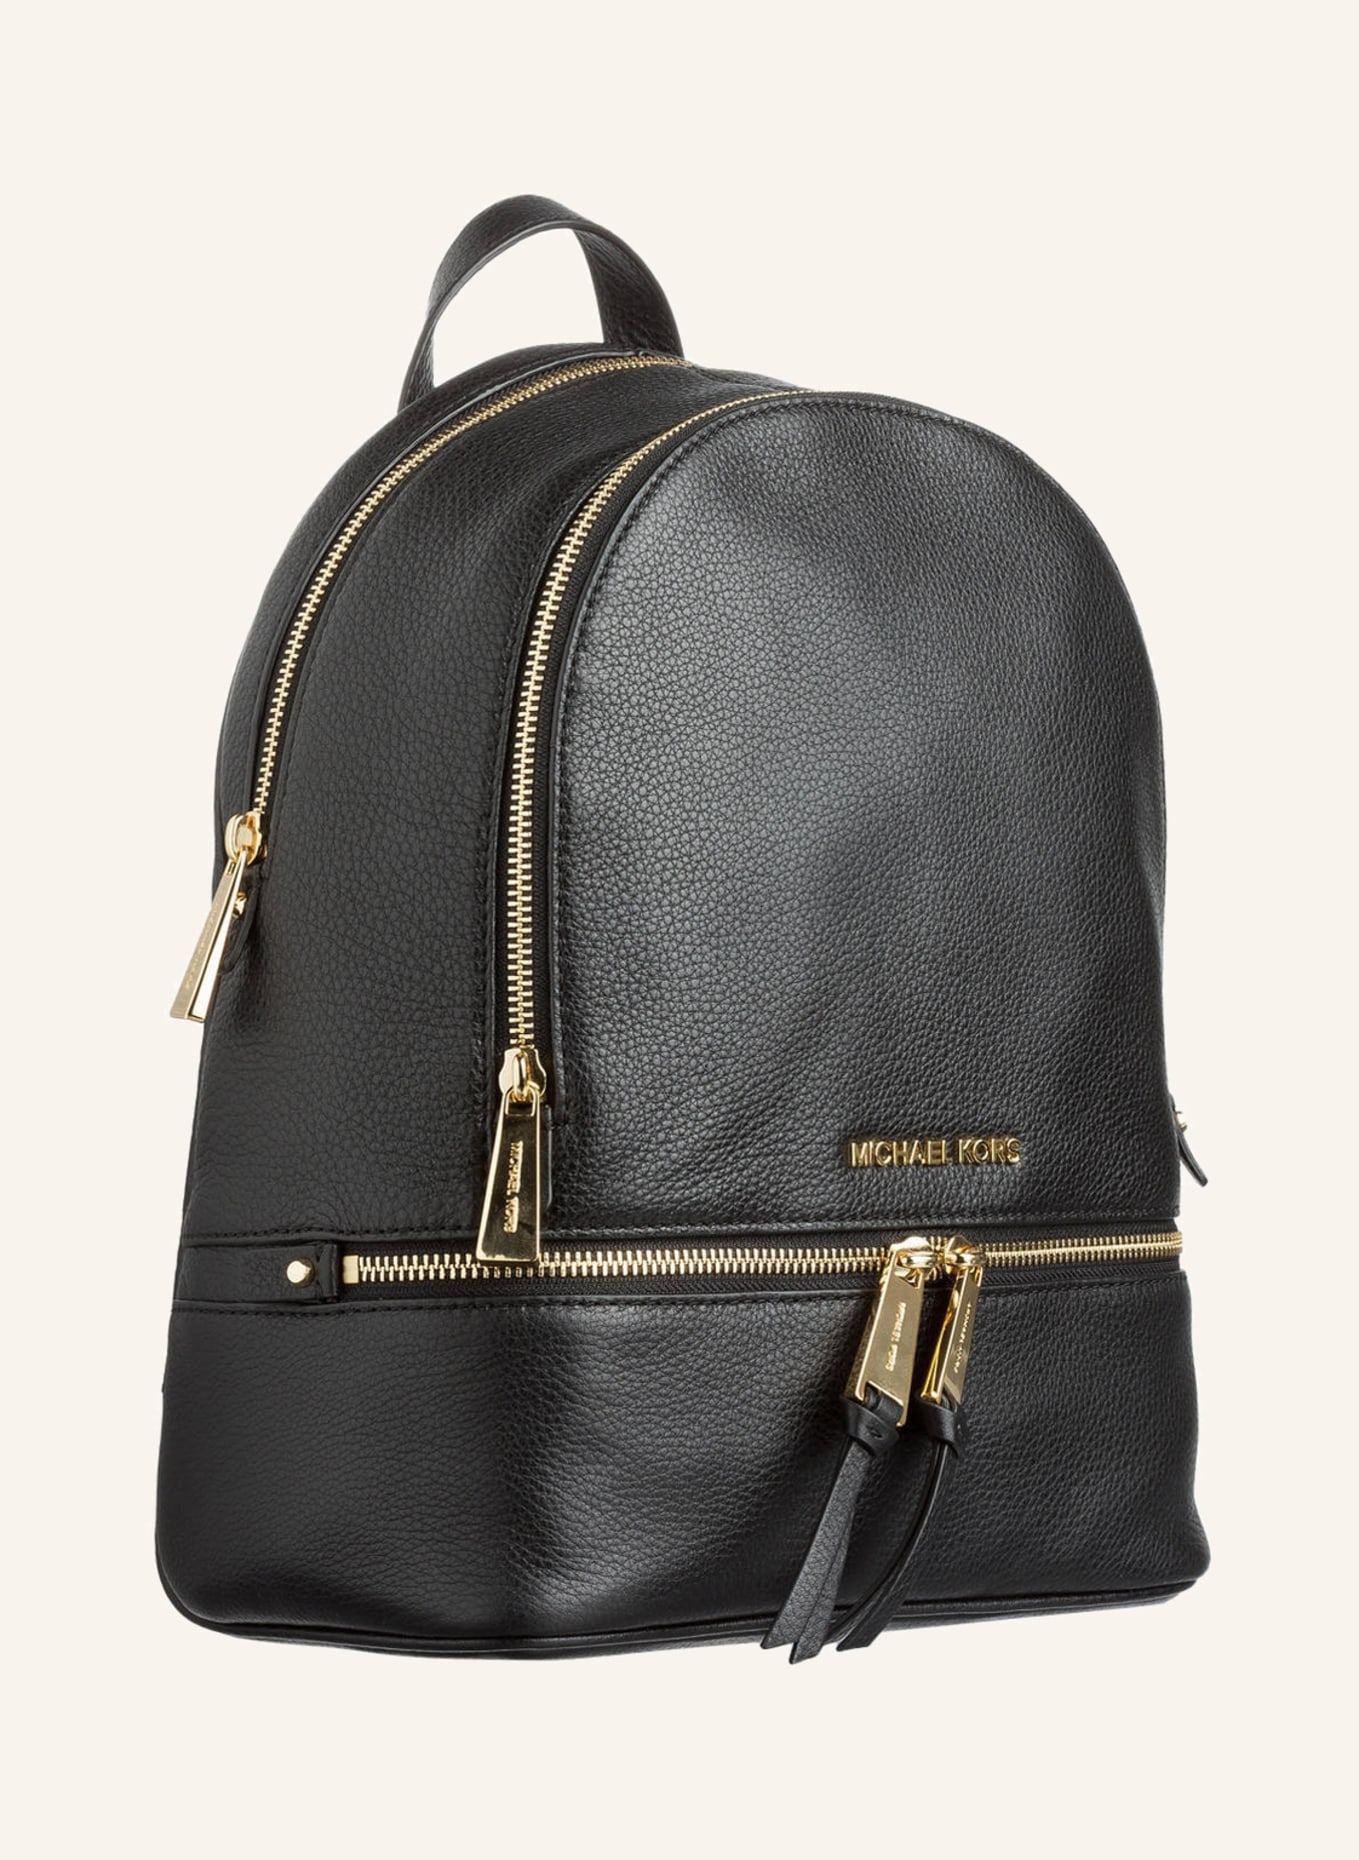 MICHAEL KORS Backpack RHEA SMALL, Color: BLACK (Image 3)